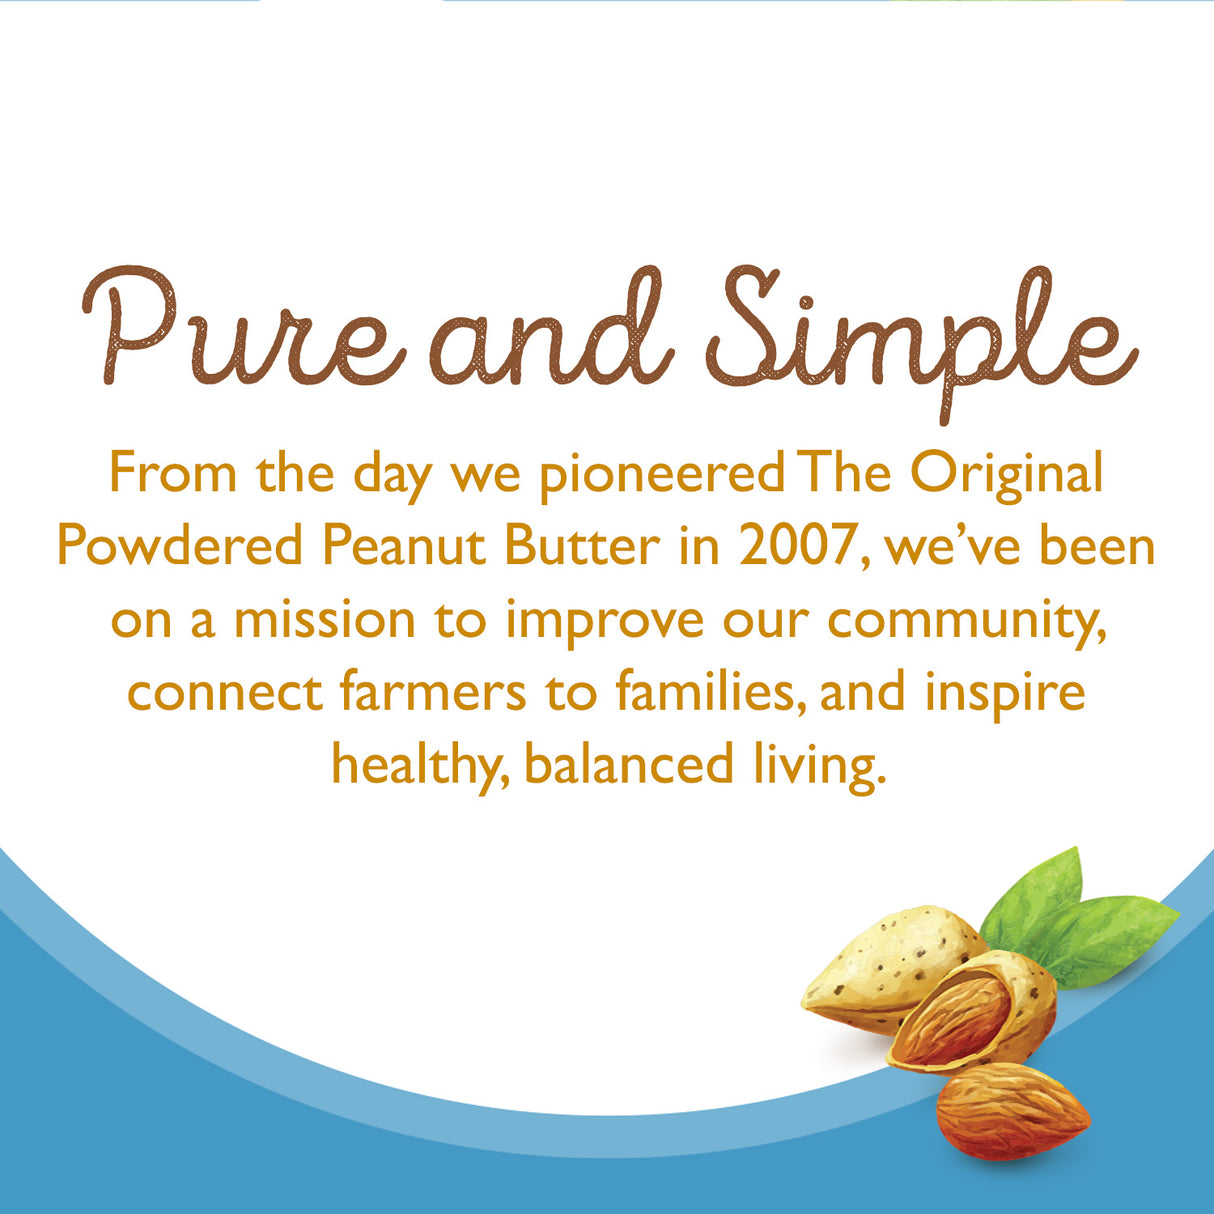 PB2 - Powdered Almond Butter